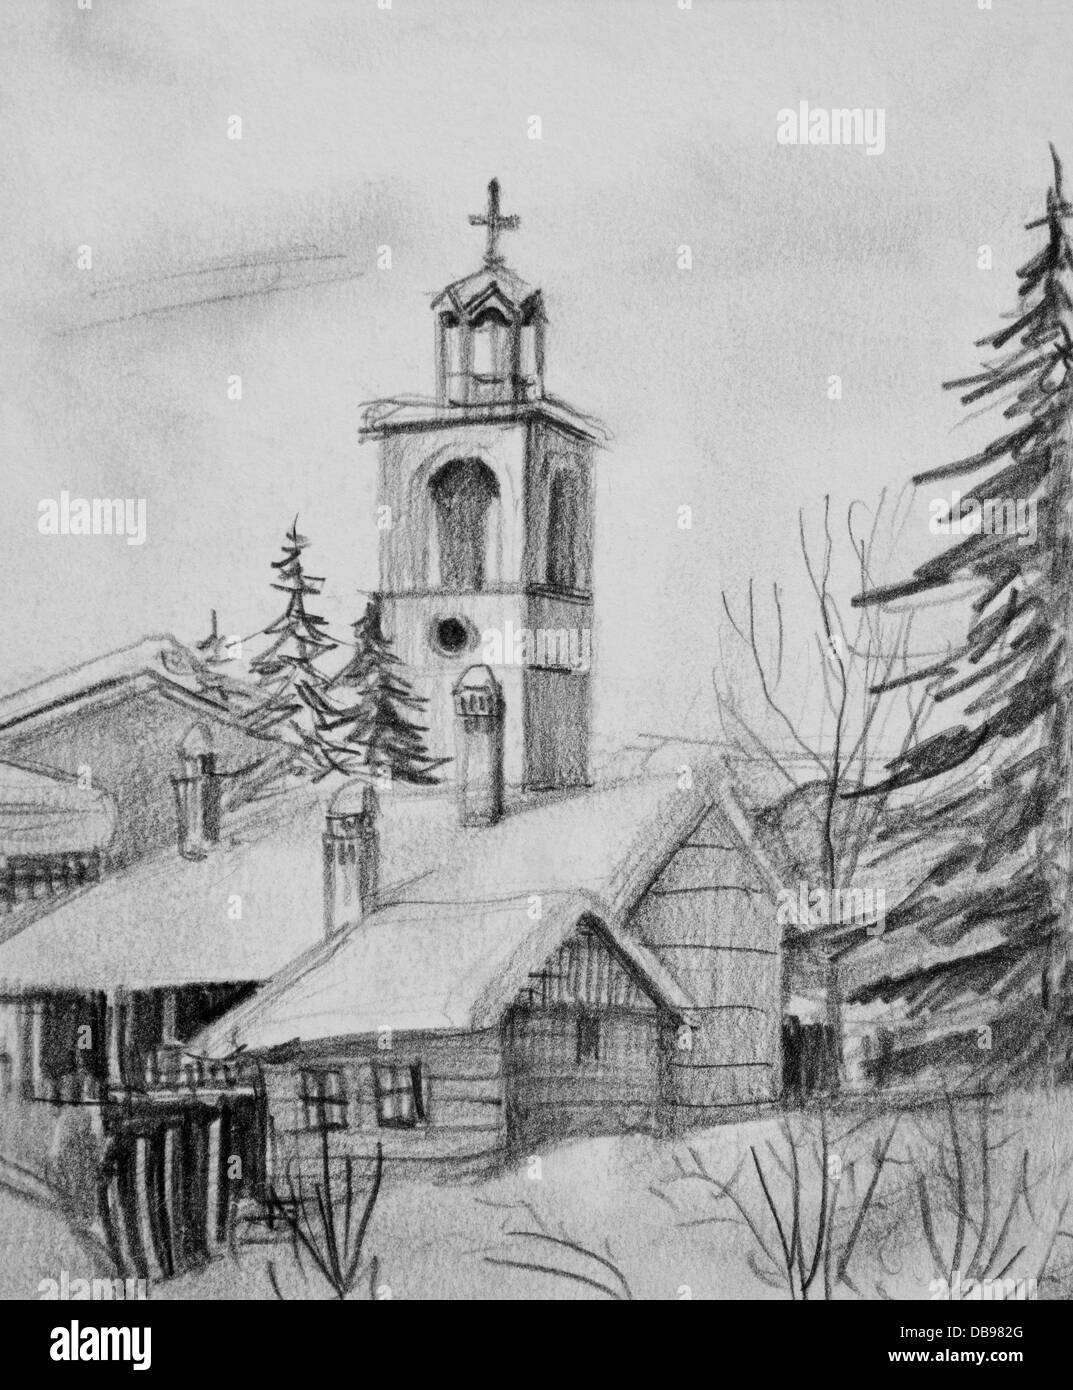 Pencil black and white drawing of an old church in ski resort Bansko in Bulgaria. Stock Photo